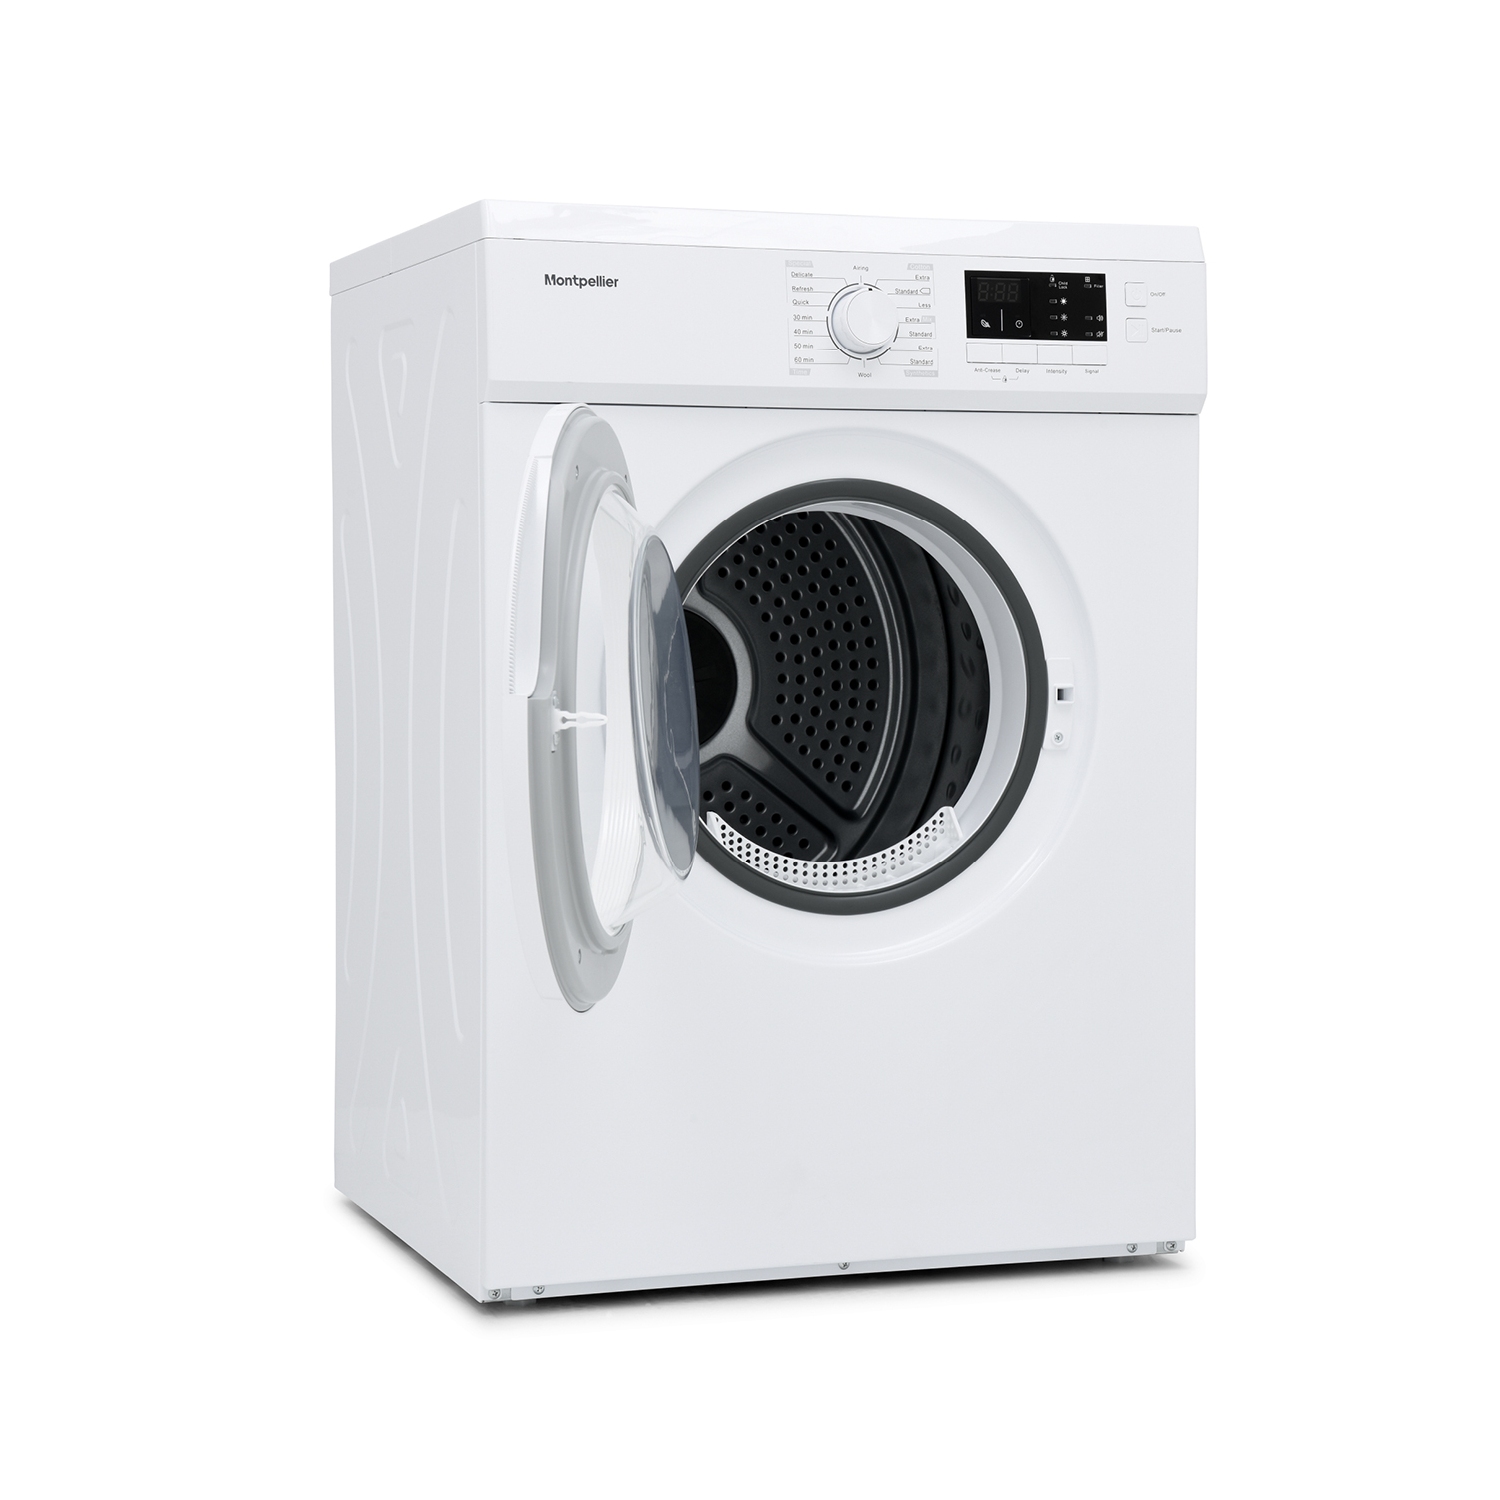 Montpellier MVSD7W 7kg Vented Tumble Dryer - White - 2